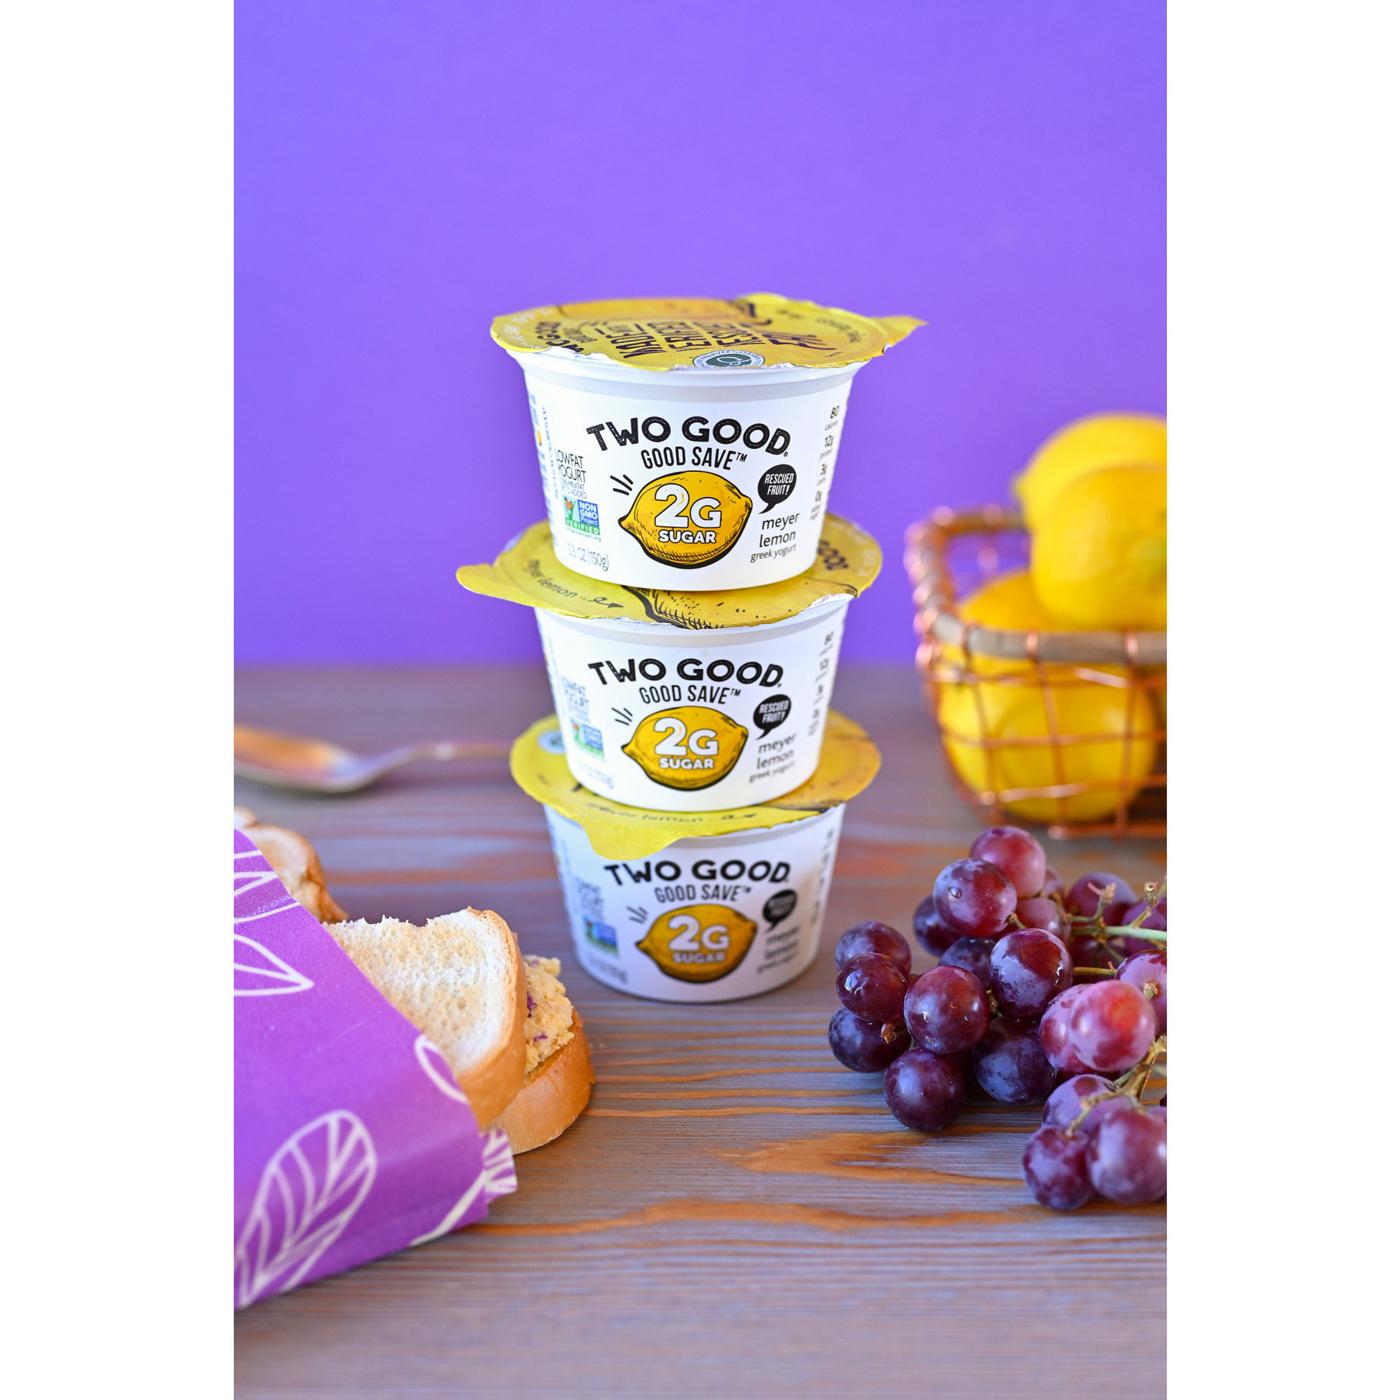 Too Good & Co. Good Save Lower Sugar Yogurt - Meyer Lemon ; image 4 of 6